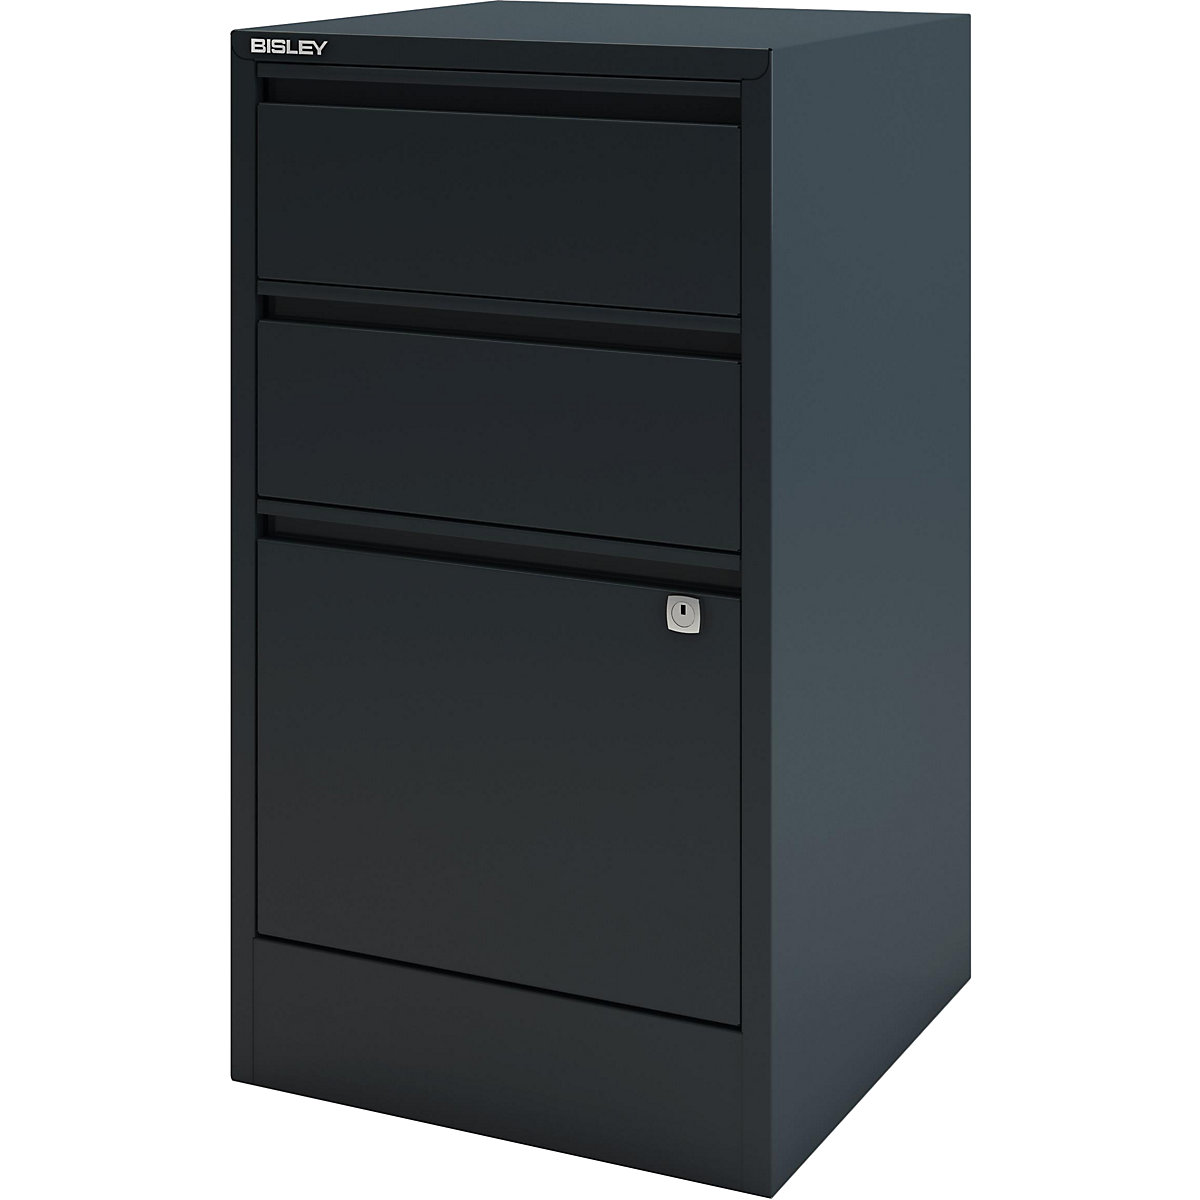 HomeFiler suspension filing cabinet – BISLEY, 2 drawers, 1 suspension file drawer, charcoal-6